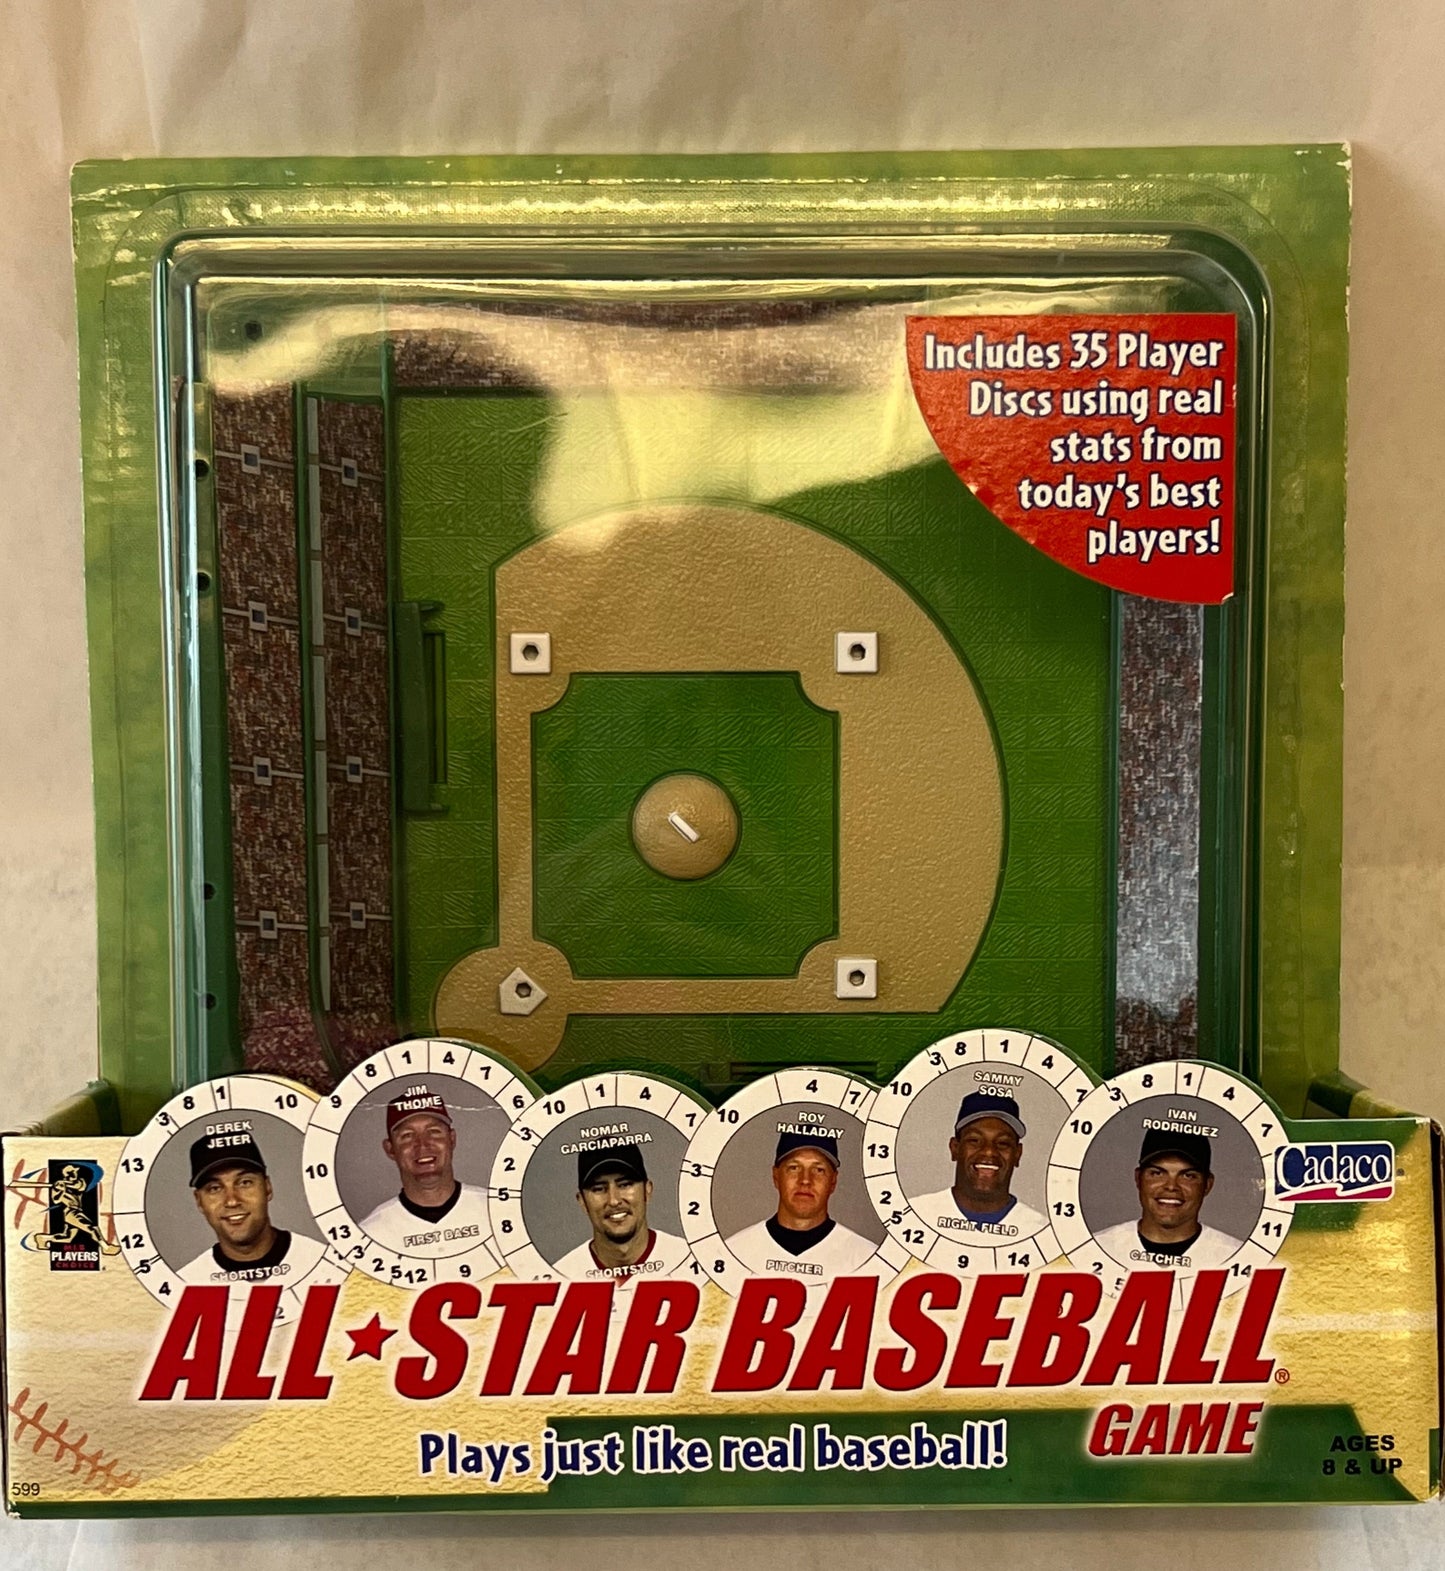 2004 All Star Baseball Game Cadaco